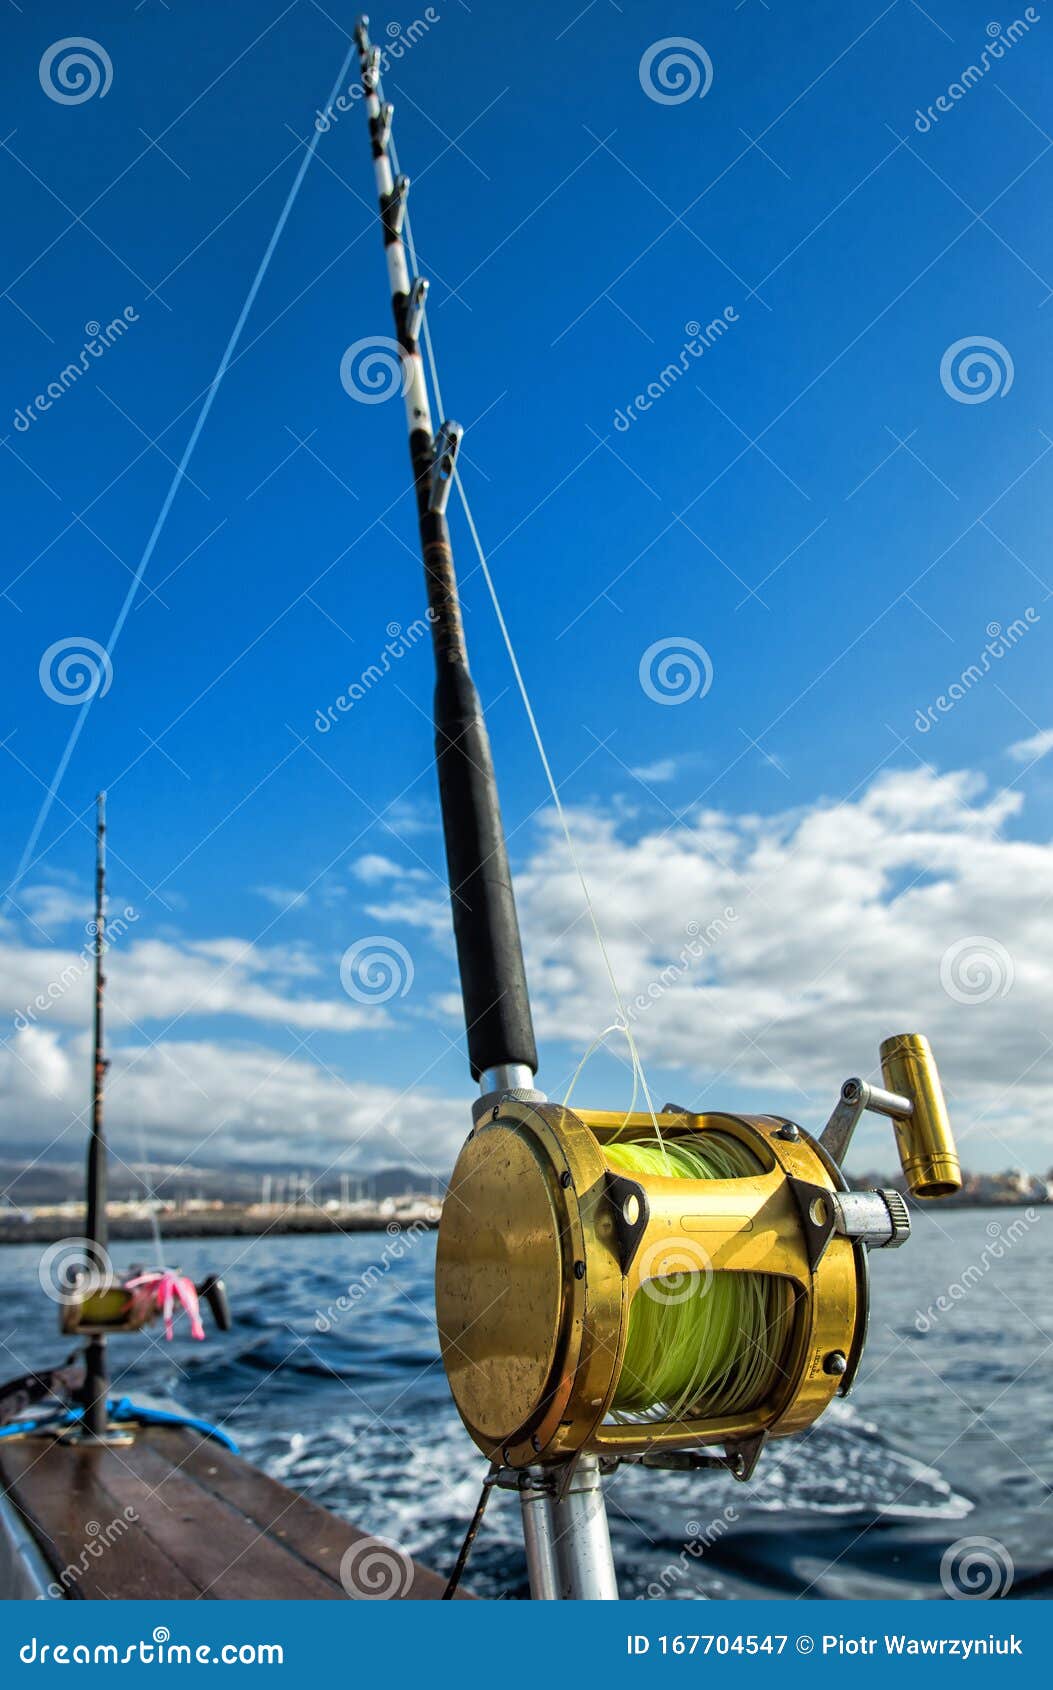 Big game fishing rods stock image. Image of reel, ship - 167704547